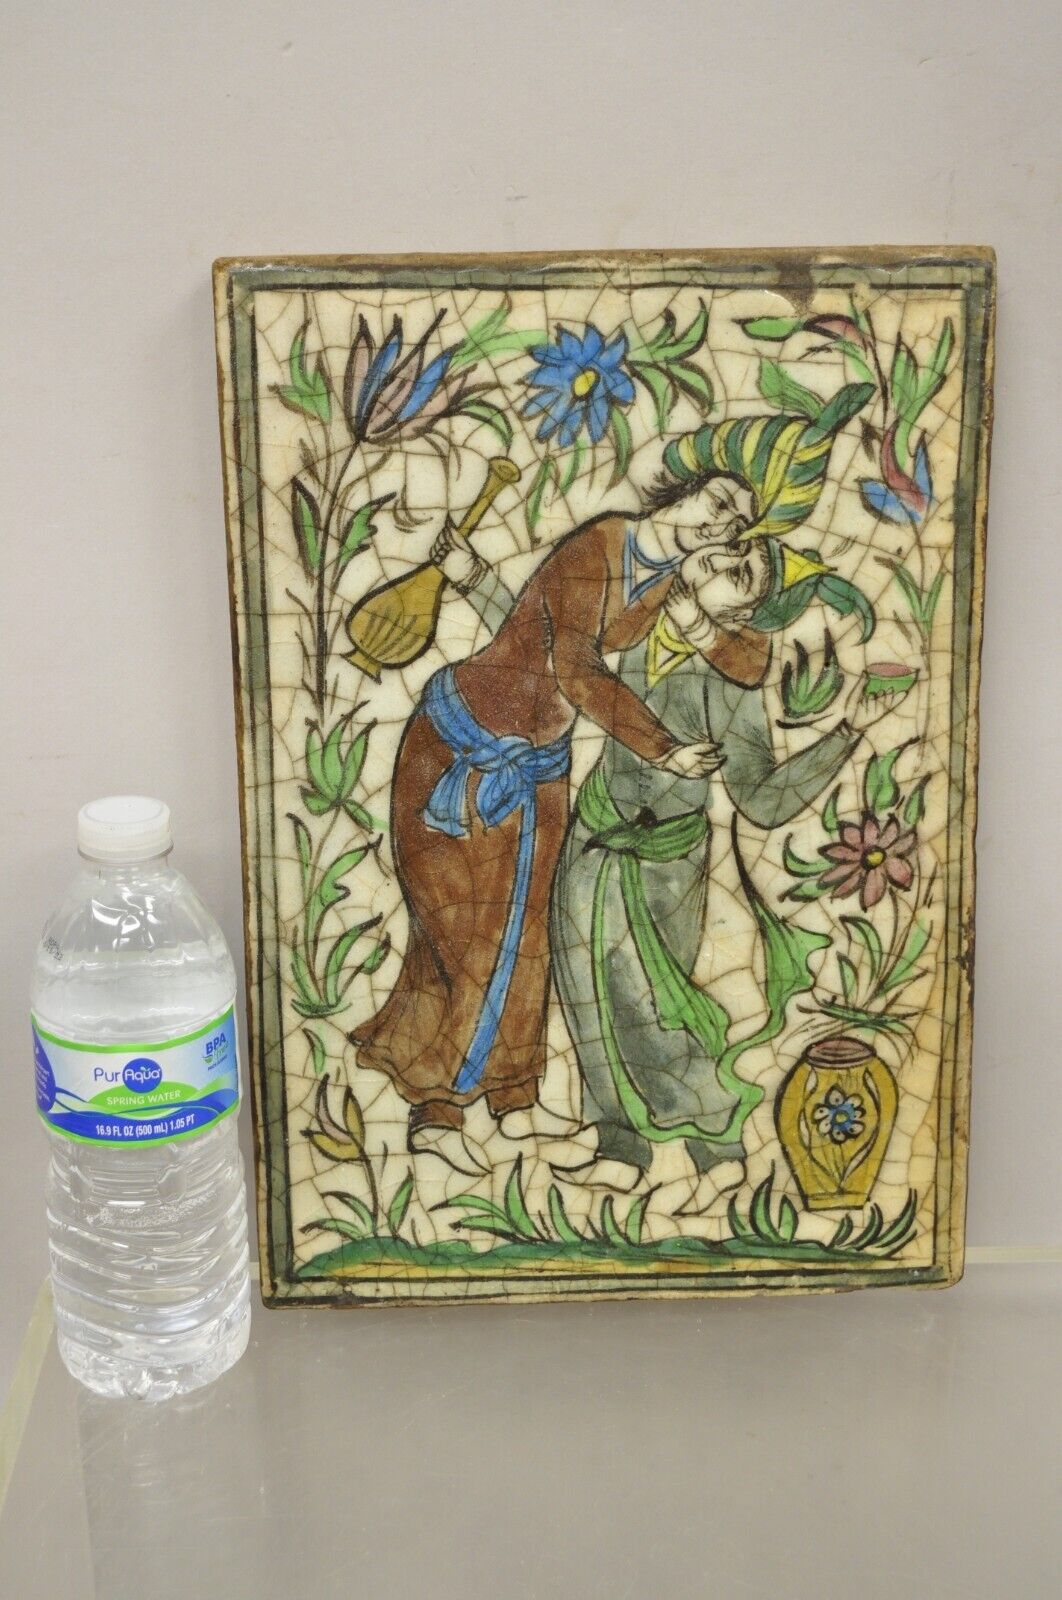 Antique Persian Iznik Qajar Style Ceramic Pottery Tile Green Couple Embrace C1